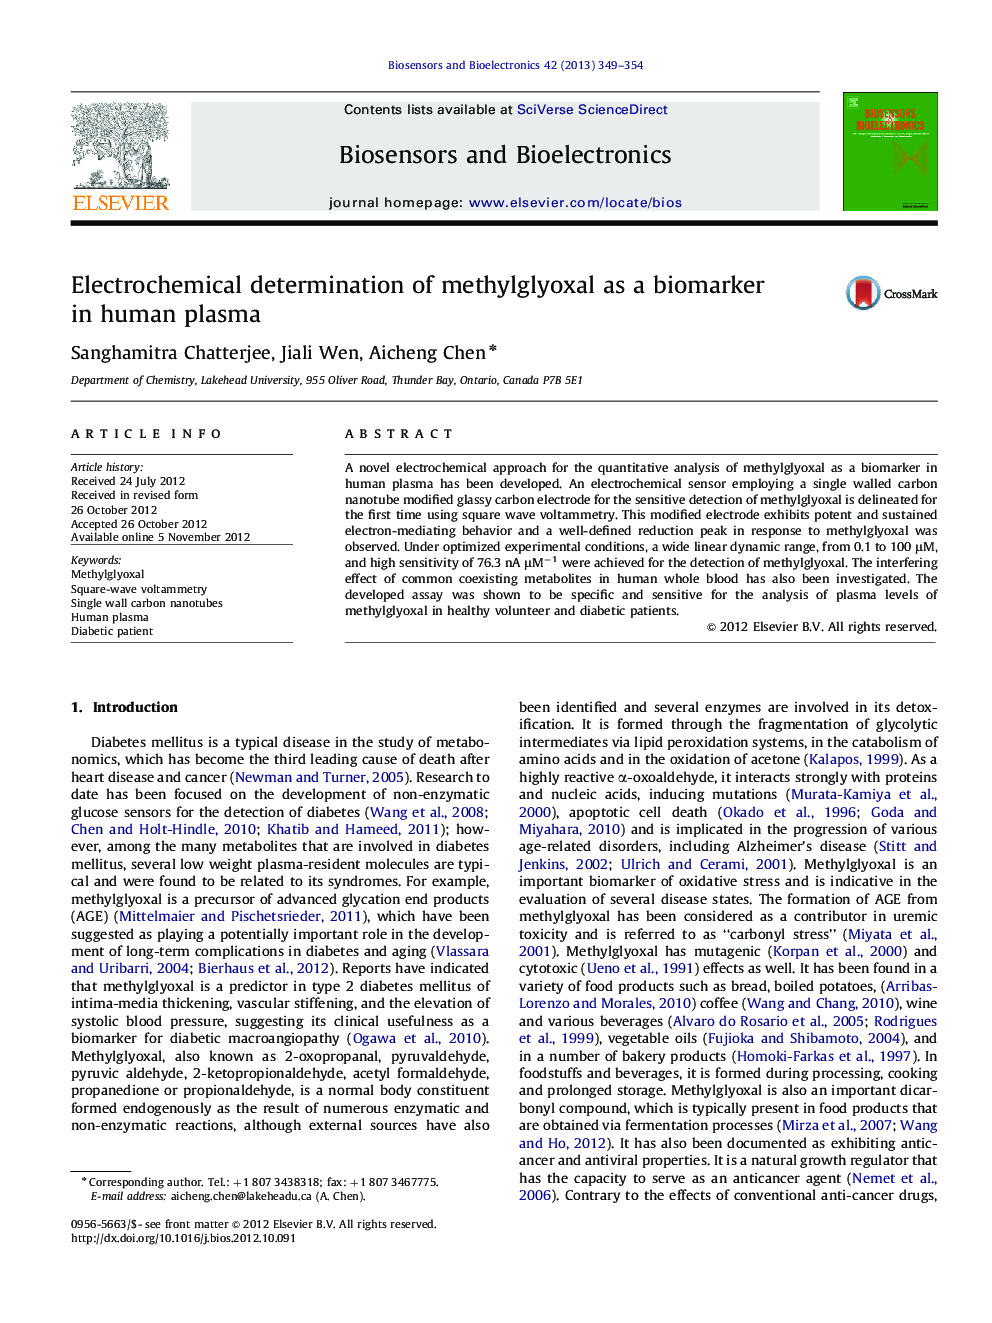 Electrochemical determination of methylglyoxal as a biomarker in humanplasma